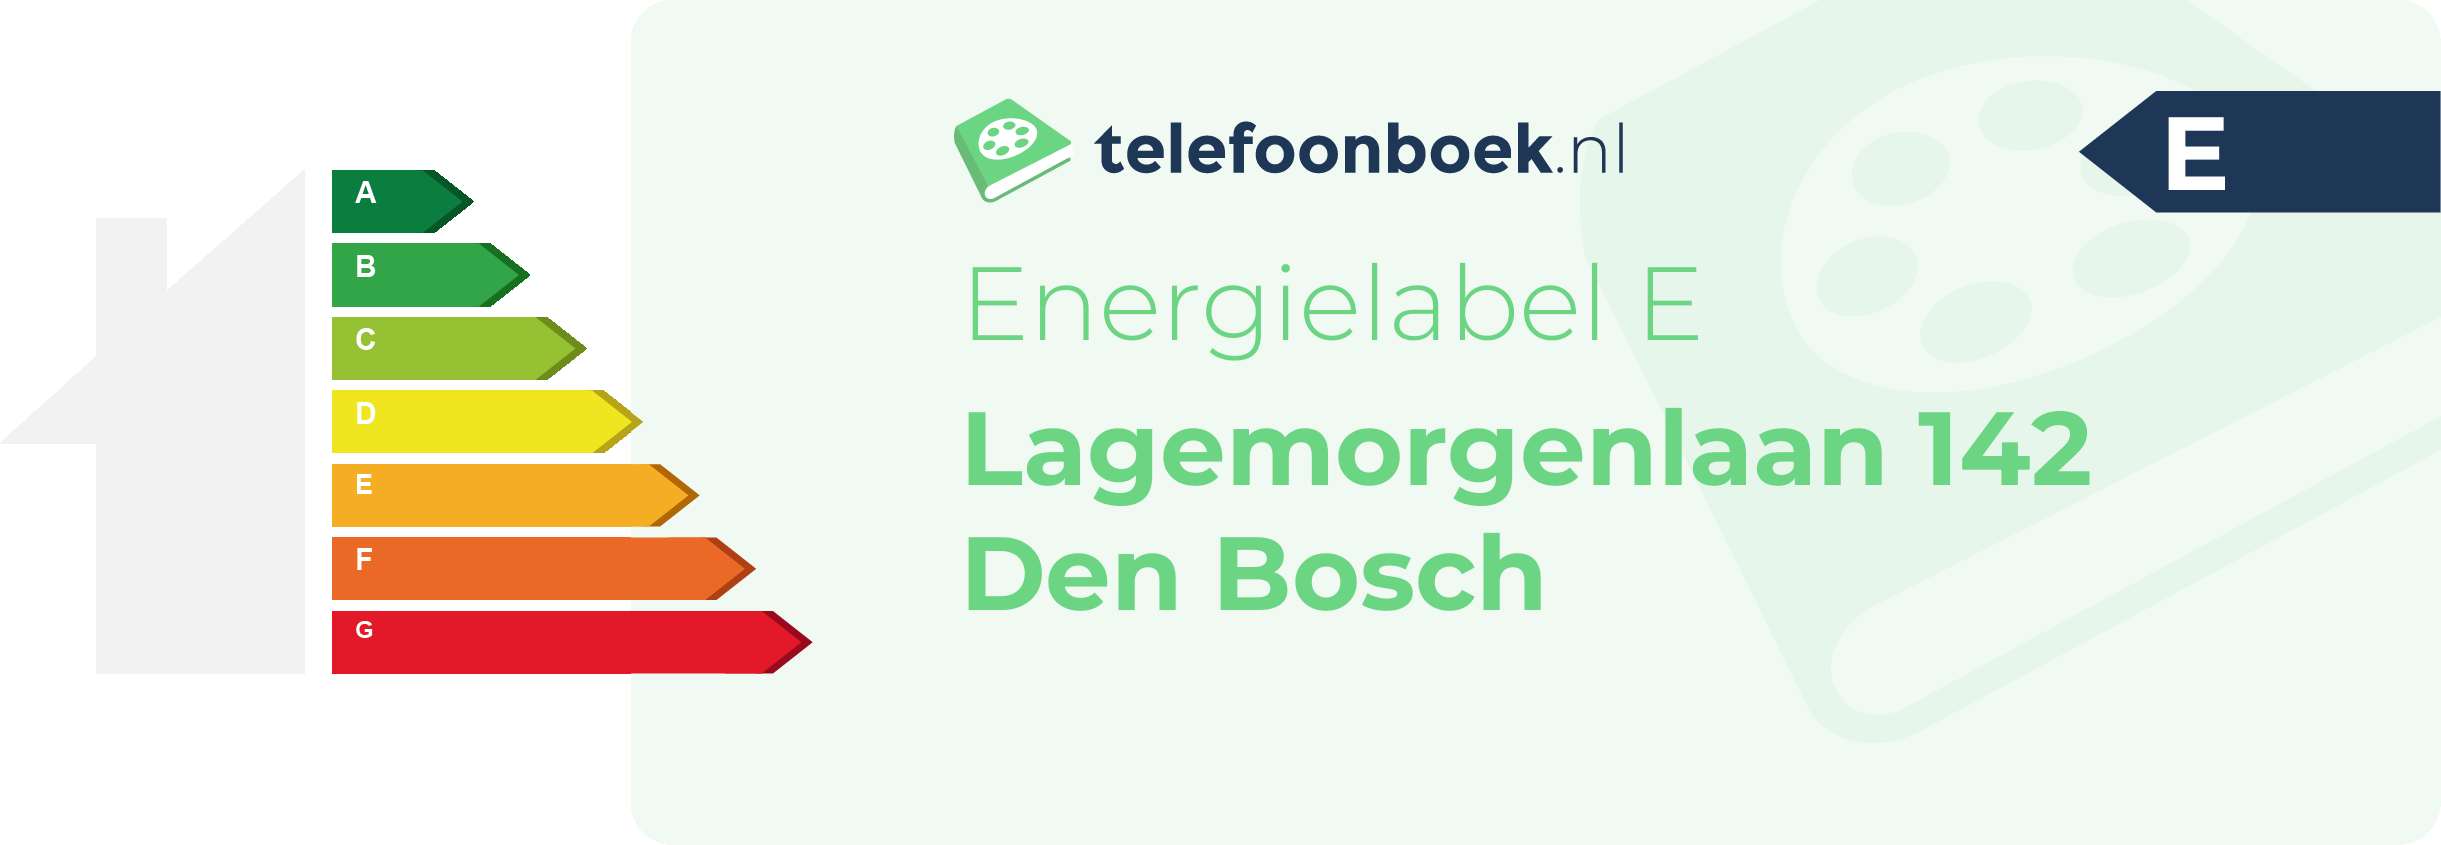 Energielabel Lagemorgenlaan 142 Den Bosch